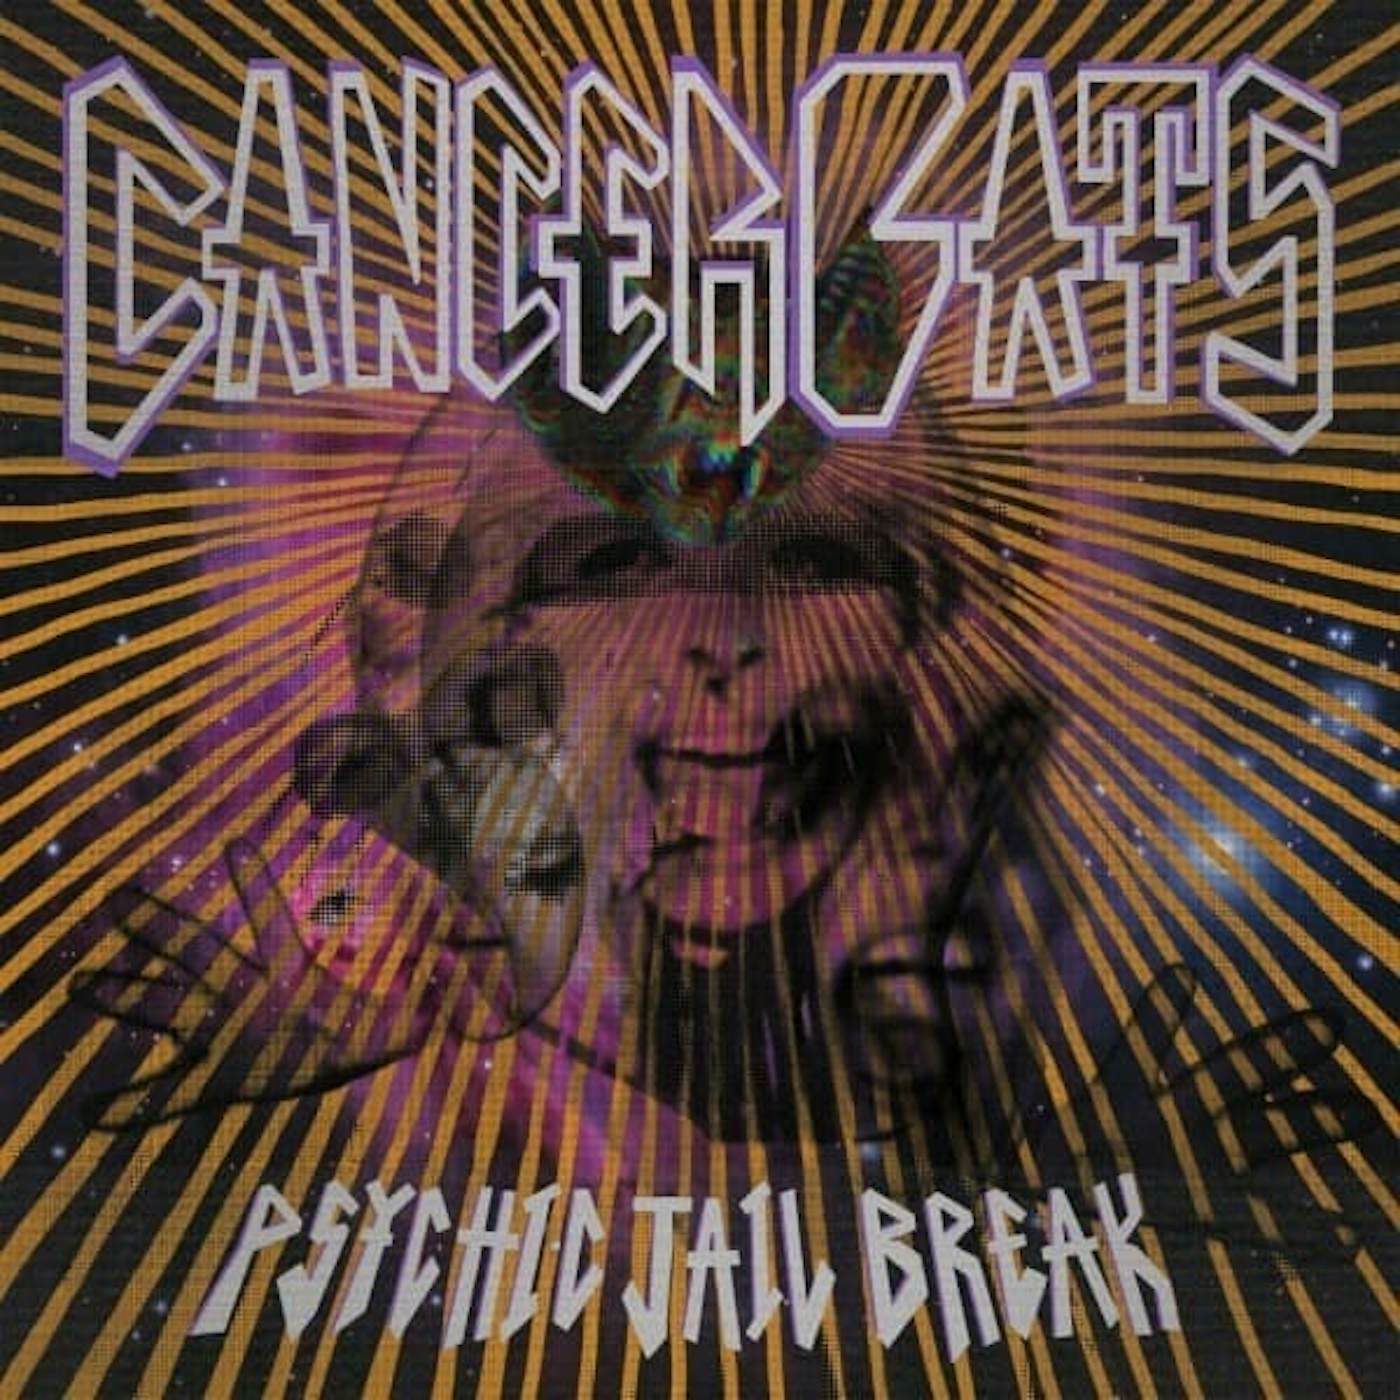 Cancer Bats Psychic Jailbreak vinyl record